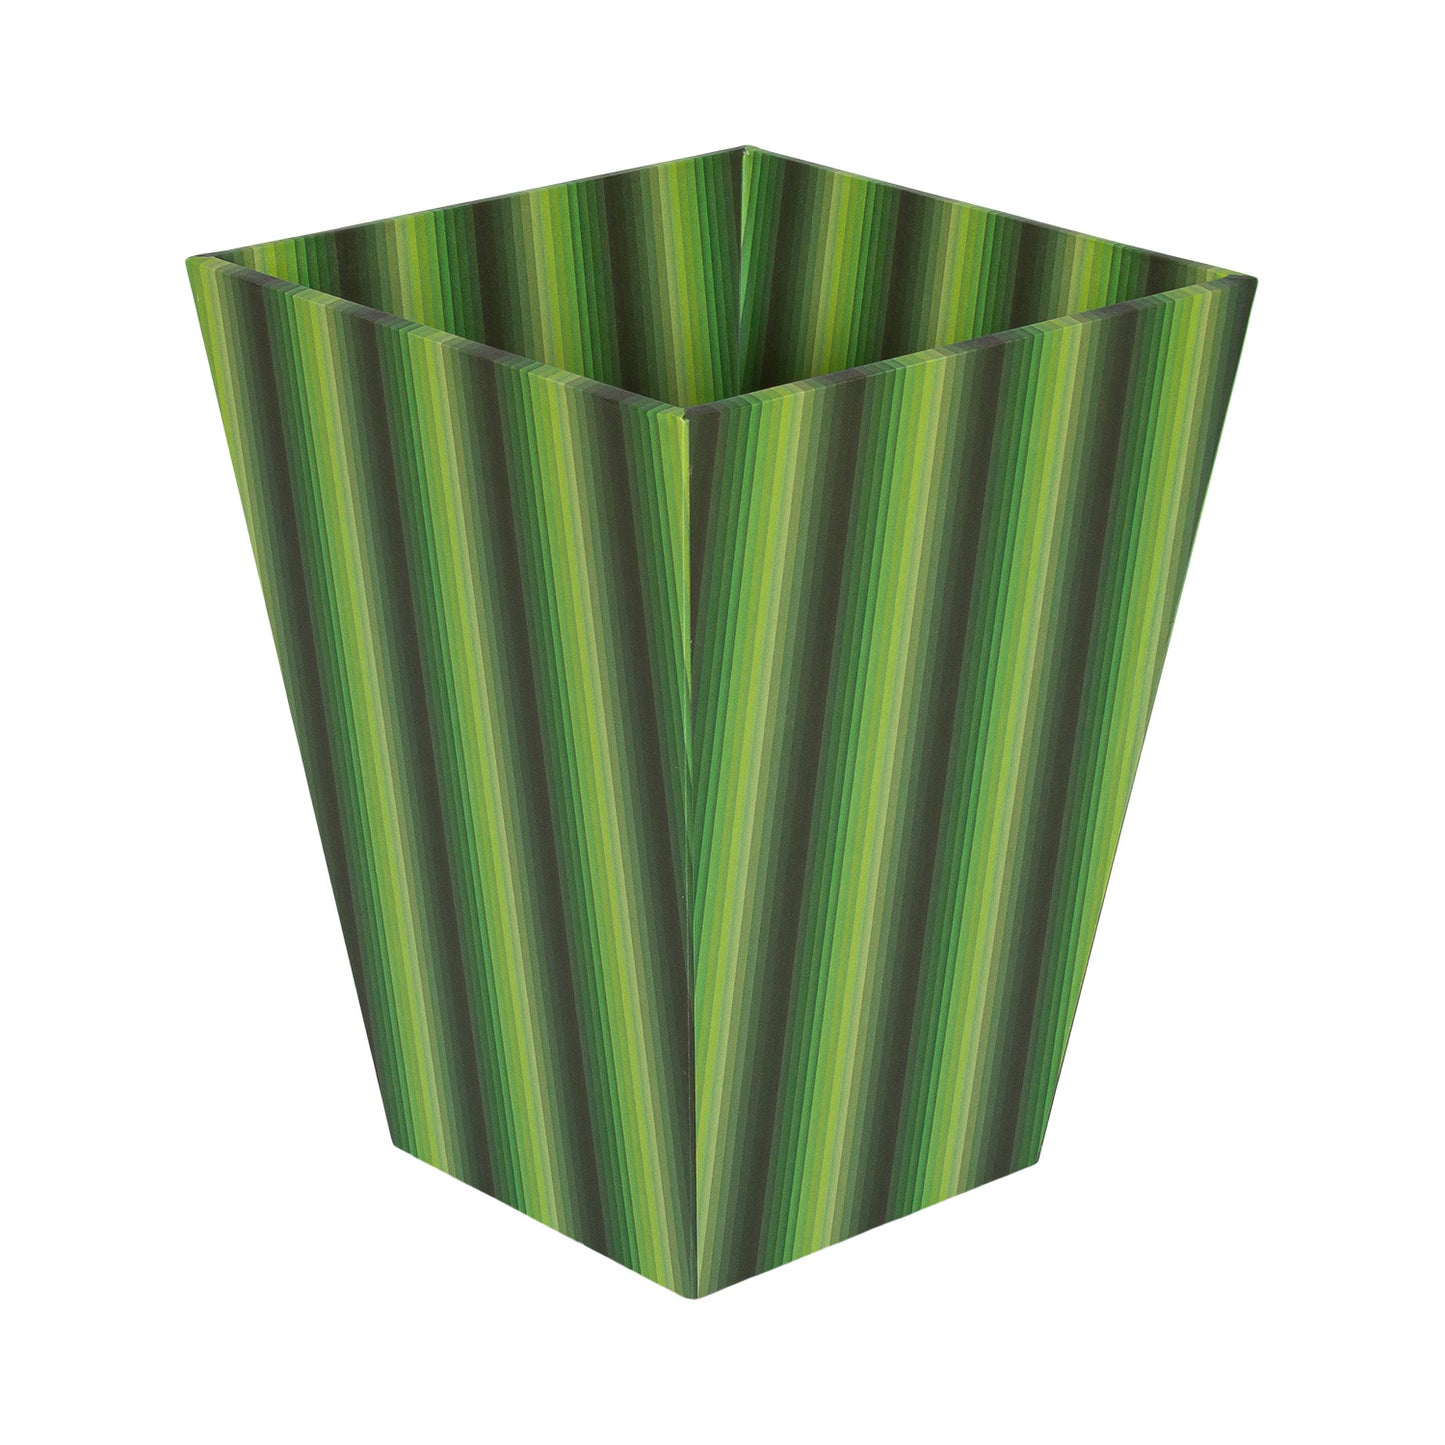 Waste Paper Bin - Undulating Stripes in Green